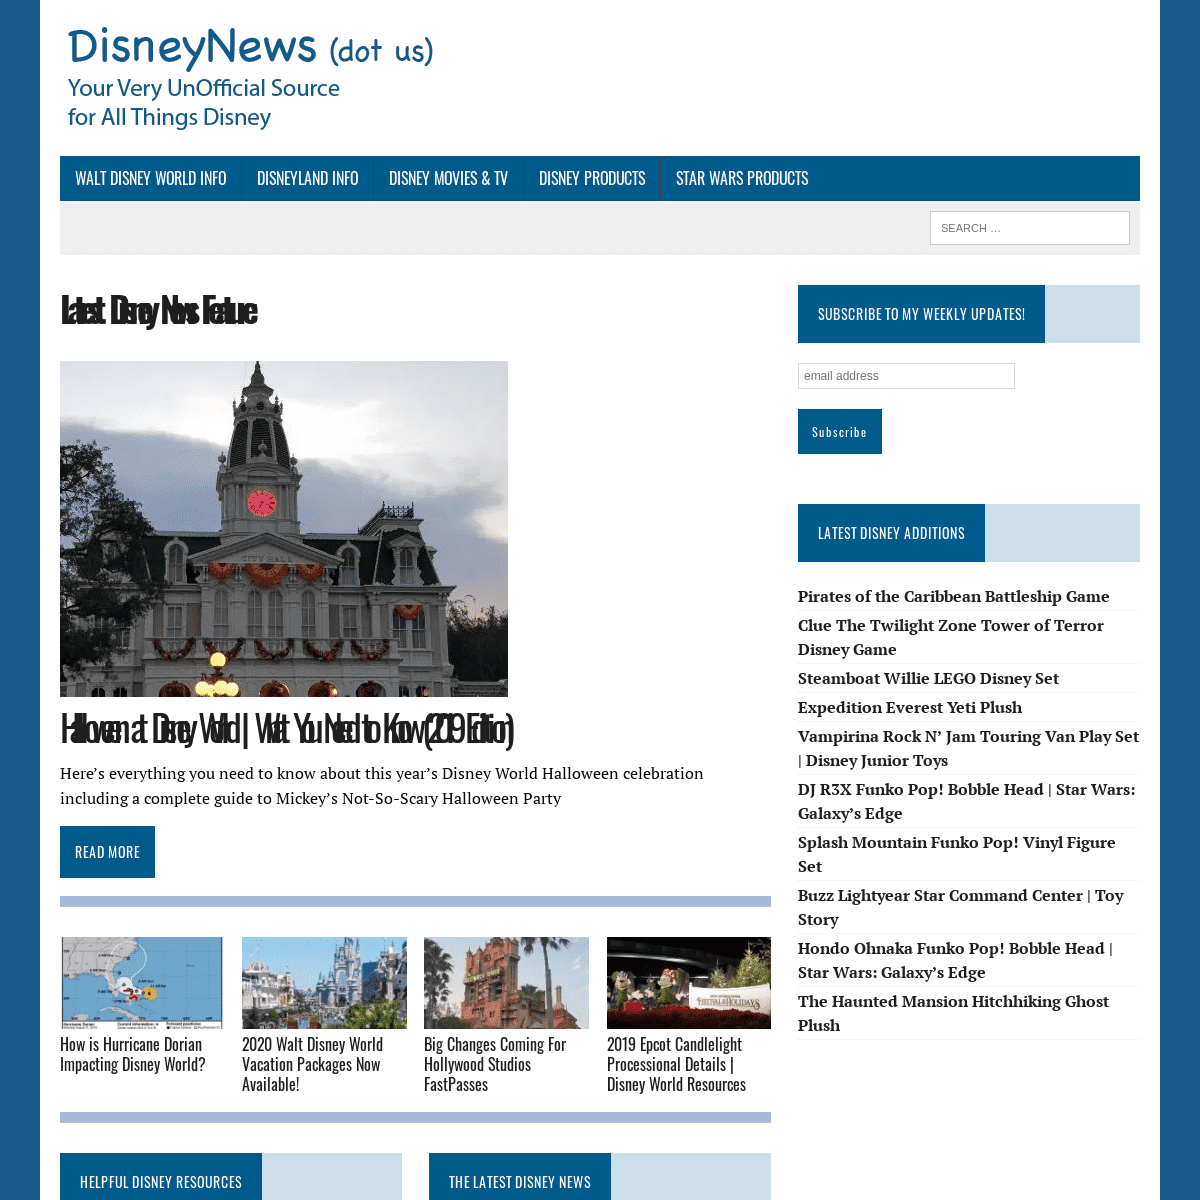 Disney News | News About Disney World, Movies, Star Wars & More!